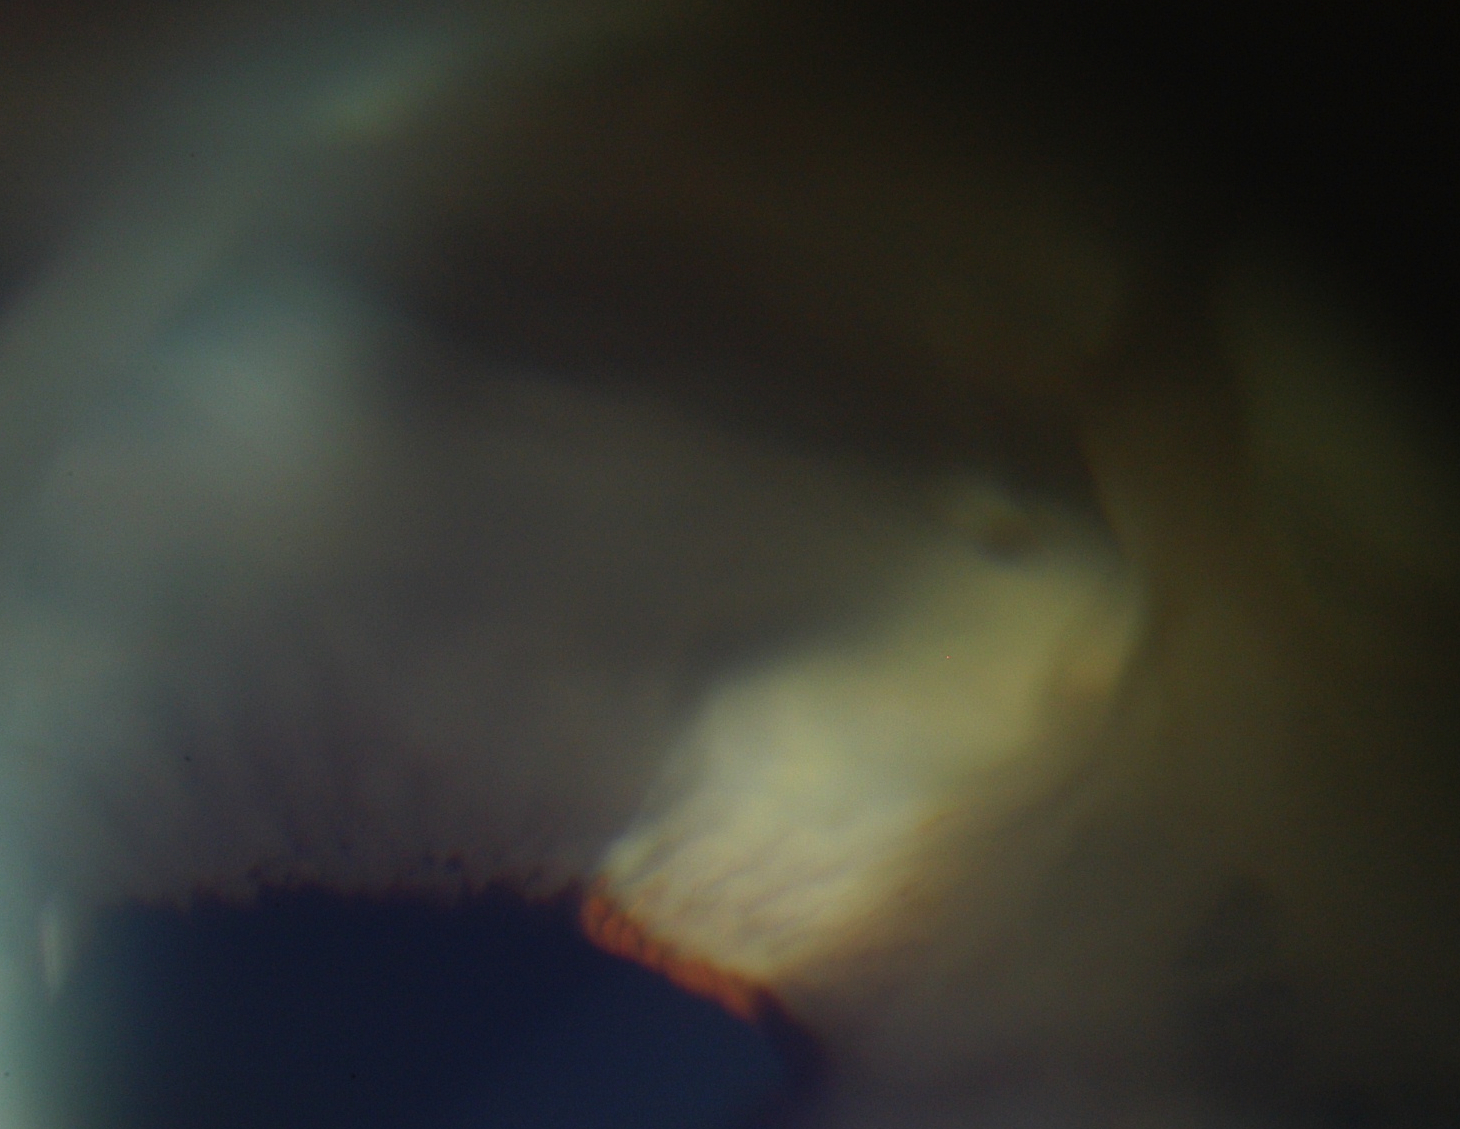 Figure 3.2.3 Childhood Glaucoma: Iridocorneal Adhesions in Peter’s Anomaly